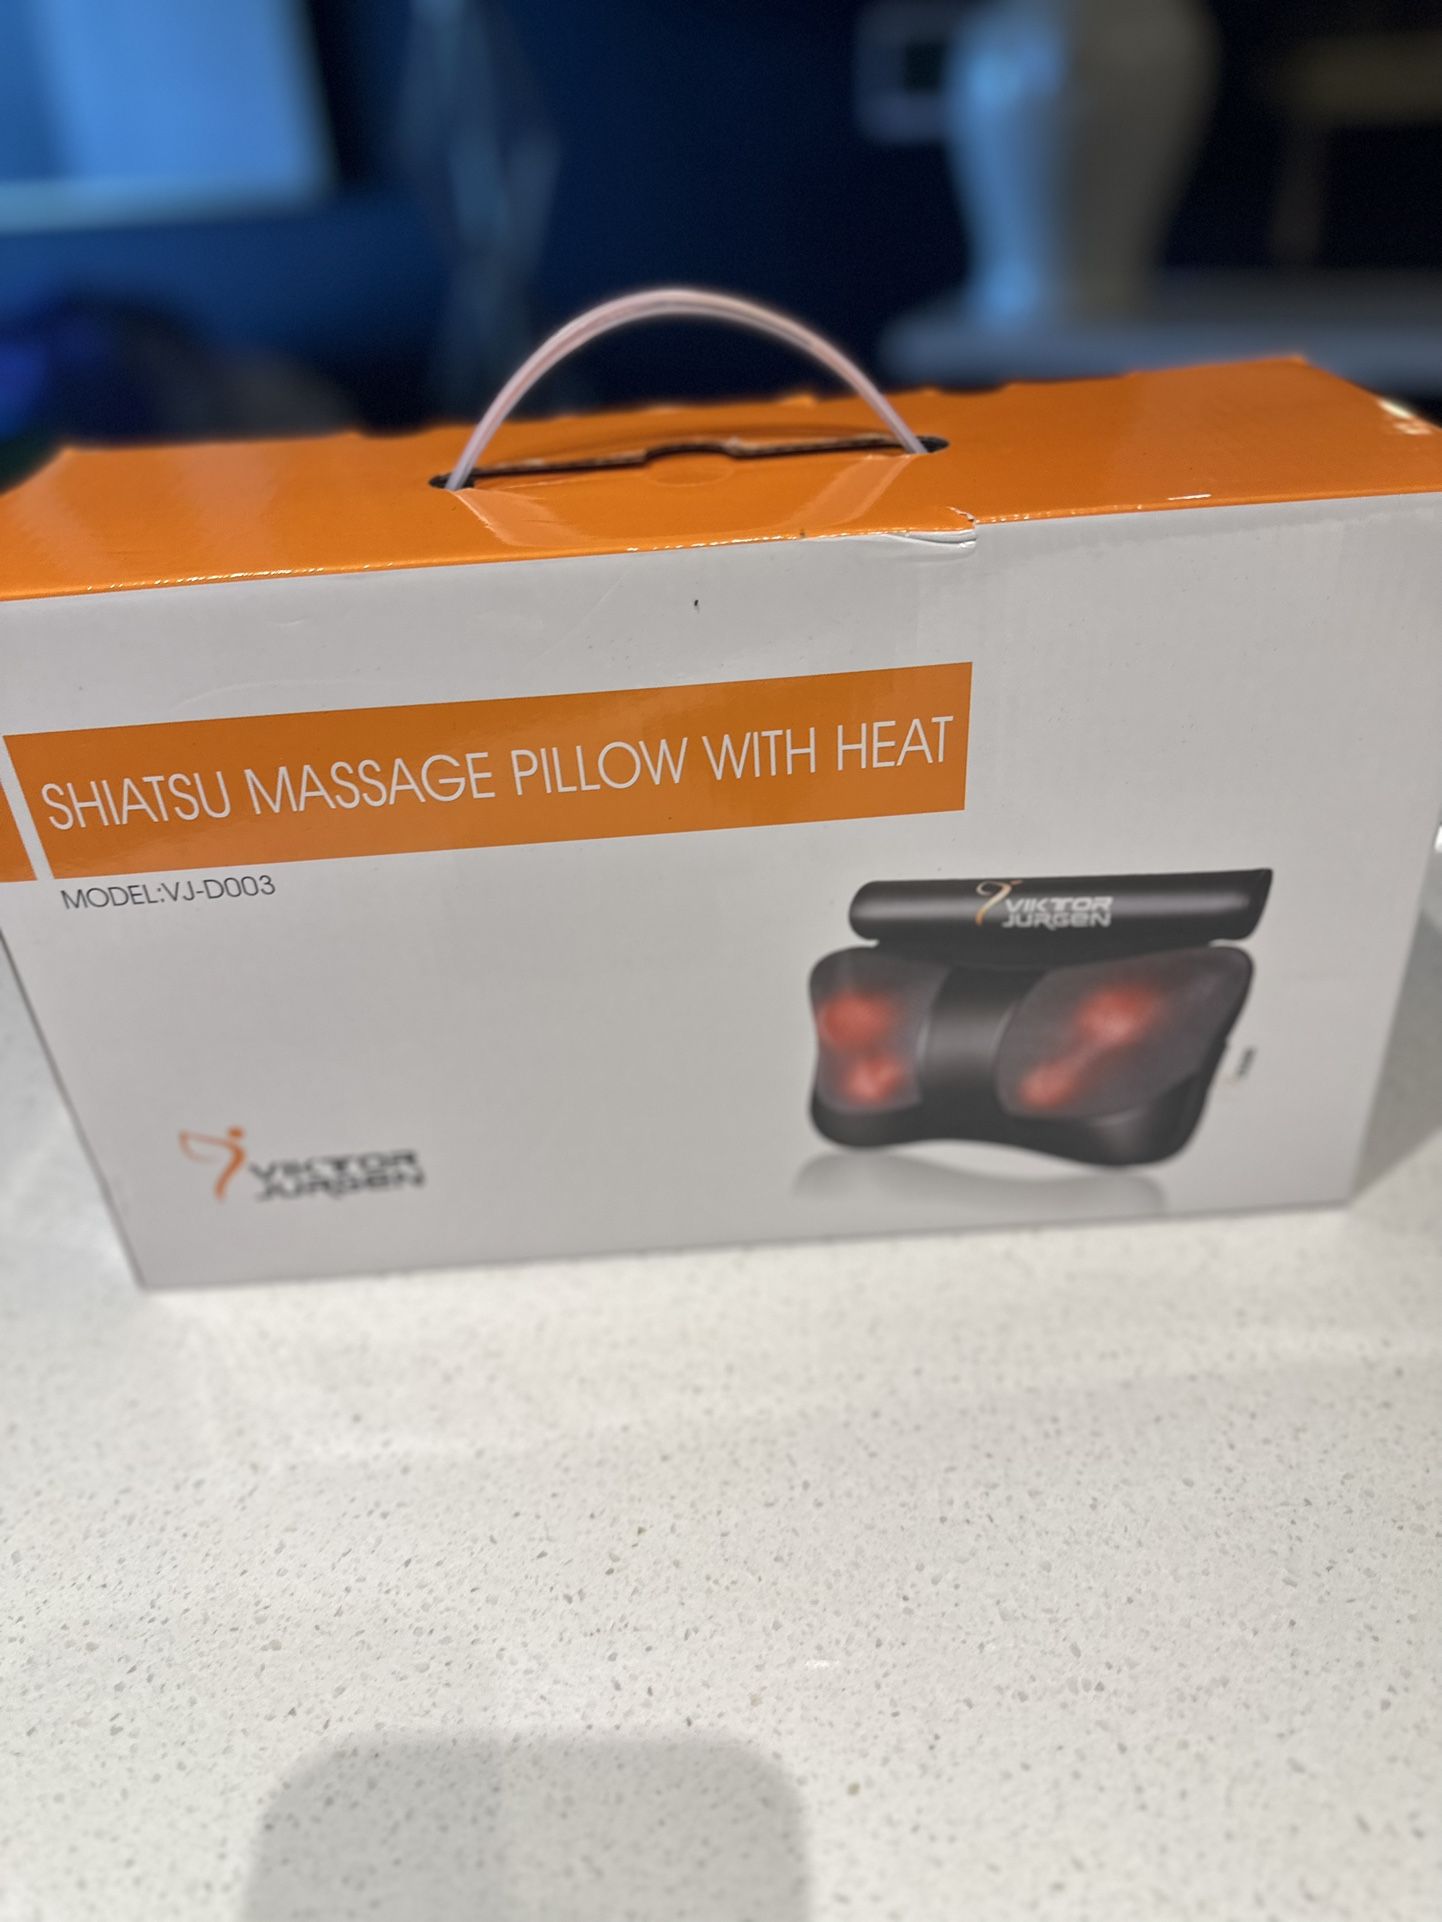 Viktor Jurgen Shiatsu Massage Visit Pillow with Heat Model VJ-D003 $45 for  Sale in Houston, TX - OfferUp